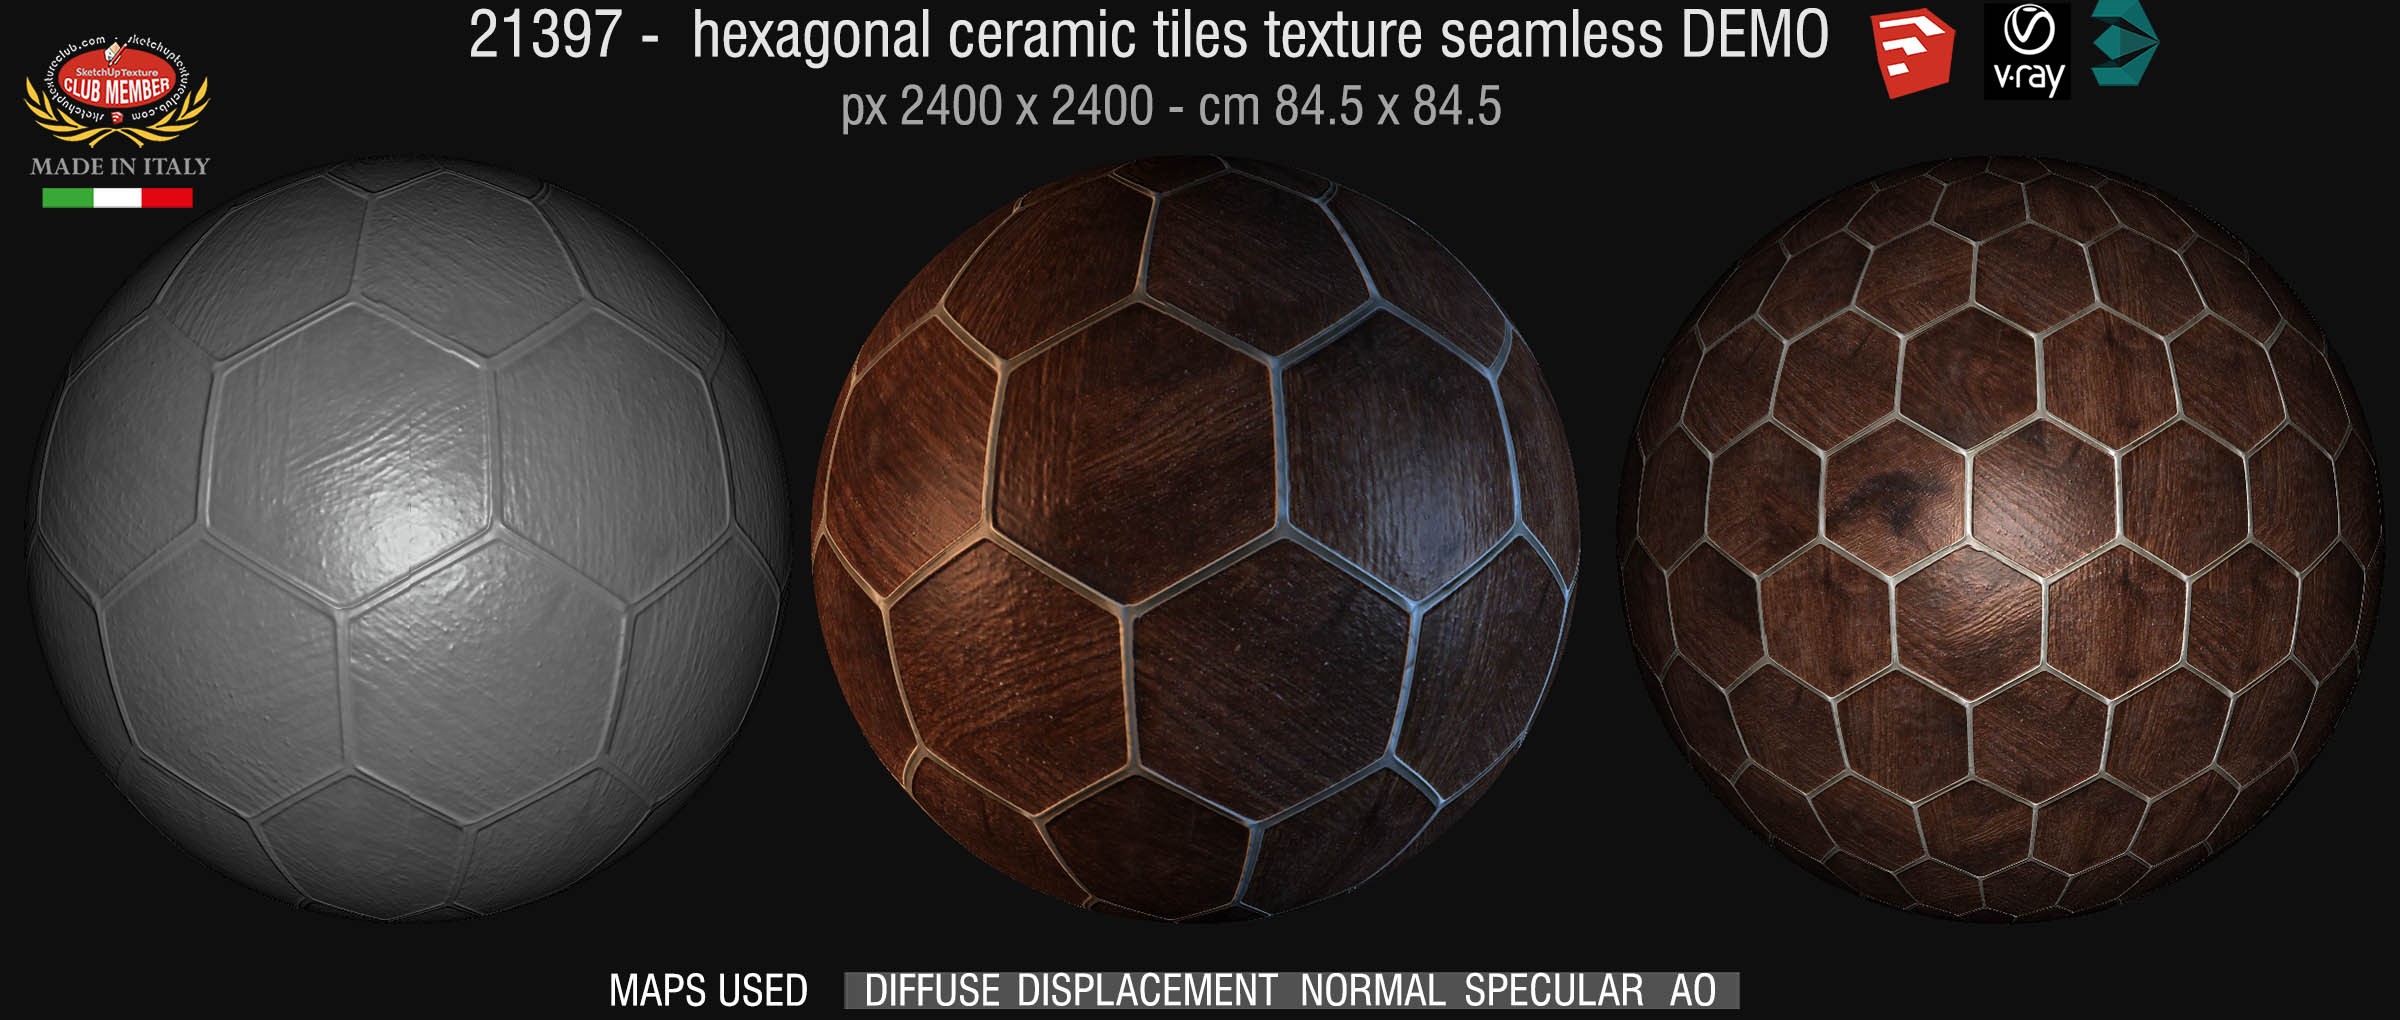 21397 hexagonal ceramic tiles texture seamless + maps DEMO